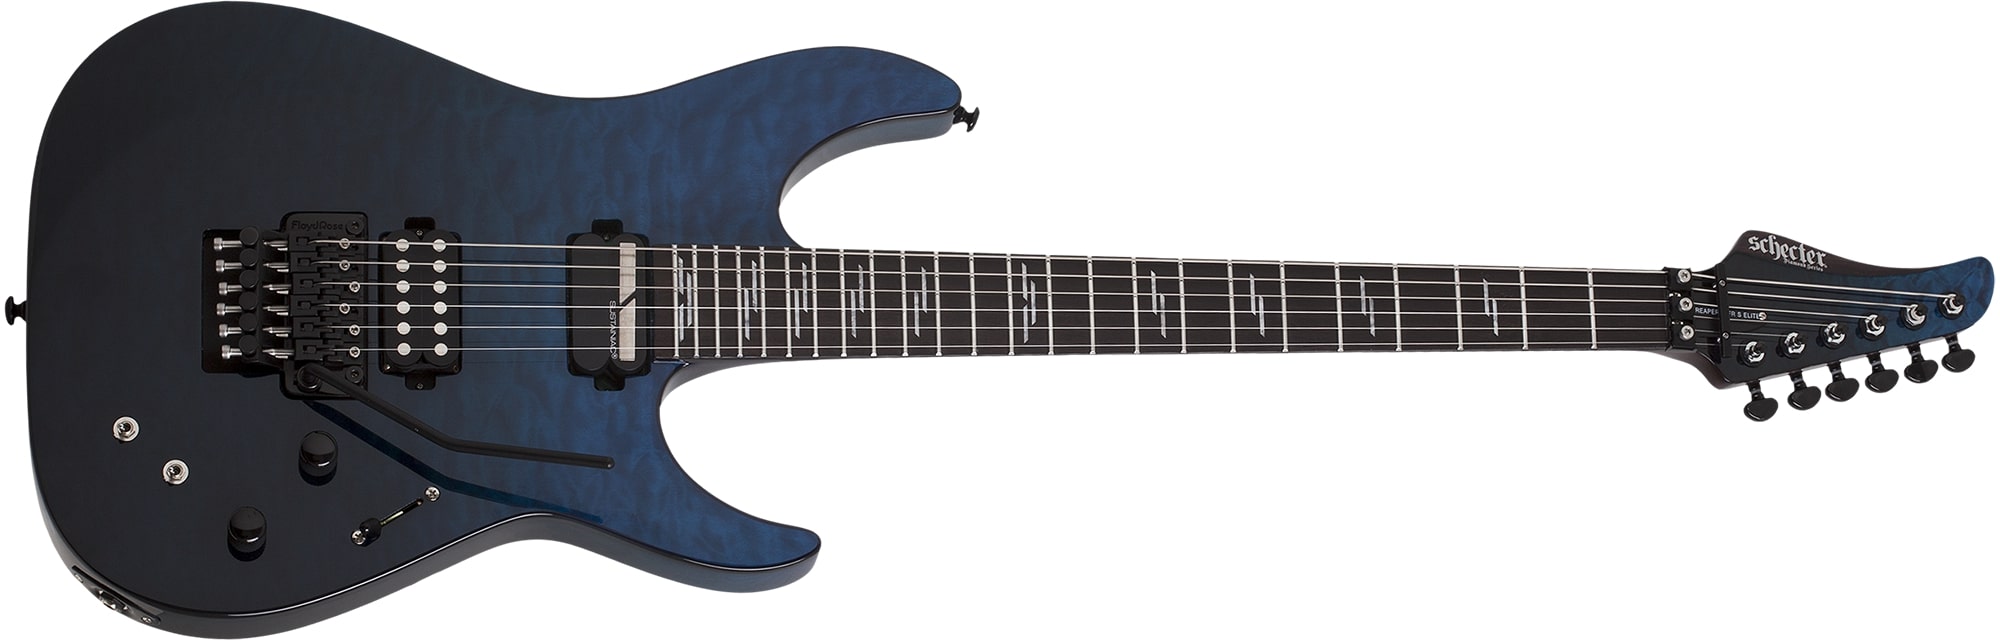 Schecter Reaper-6 FR S Elite Electric Guitar, Deep Ocean Blue 2187-SHC